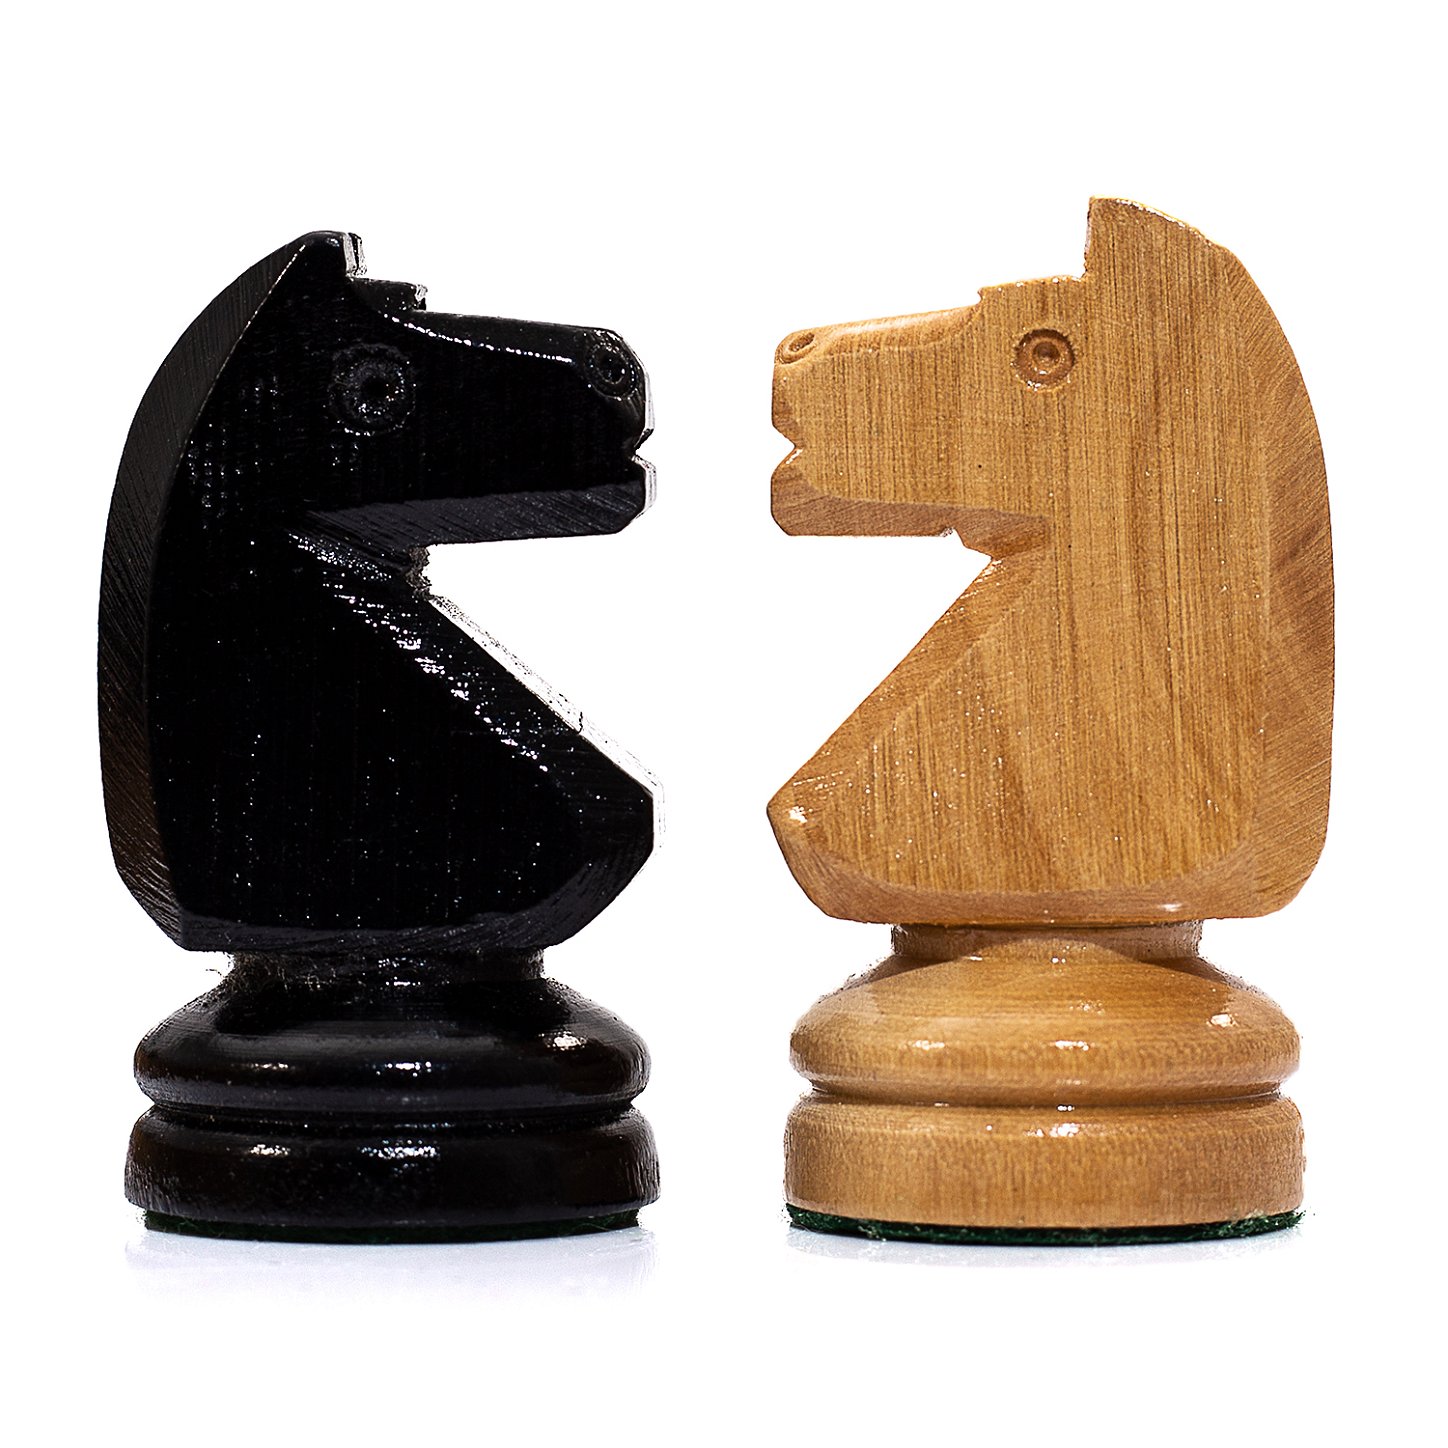 Xadrez madeira xadrez madeira xadrez tabuleiro de madeira peças de madeira  maciça peças dobrando xadrez tabuleiro de xadrez jogo de xadrez de alta  extremidade